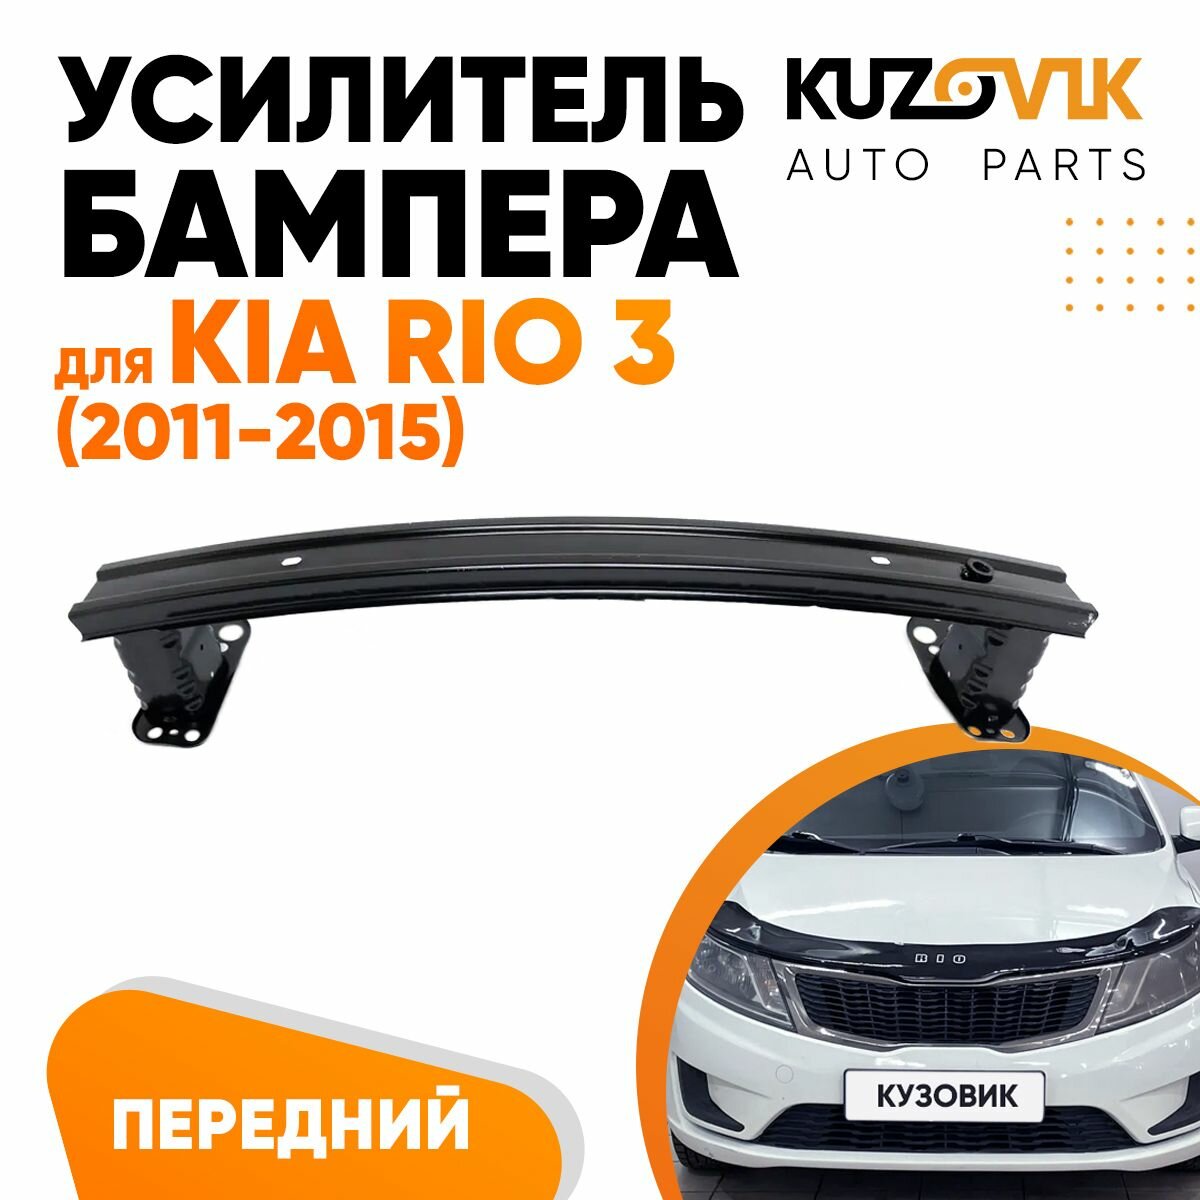 Усилитель переднего бампера Kia Rio 3 (2011-2015)